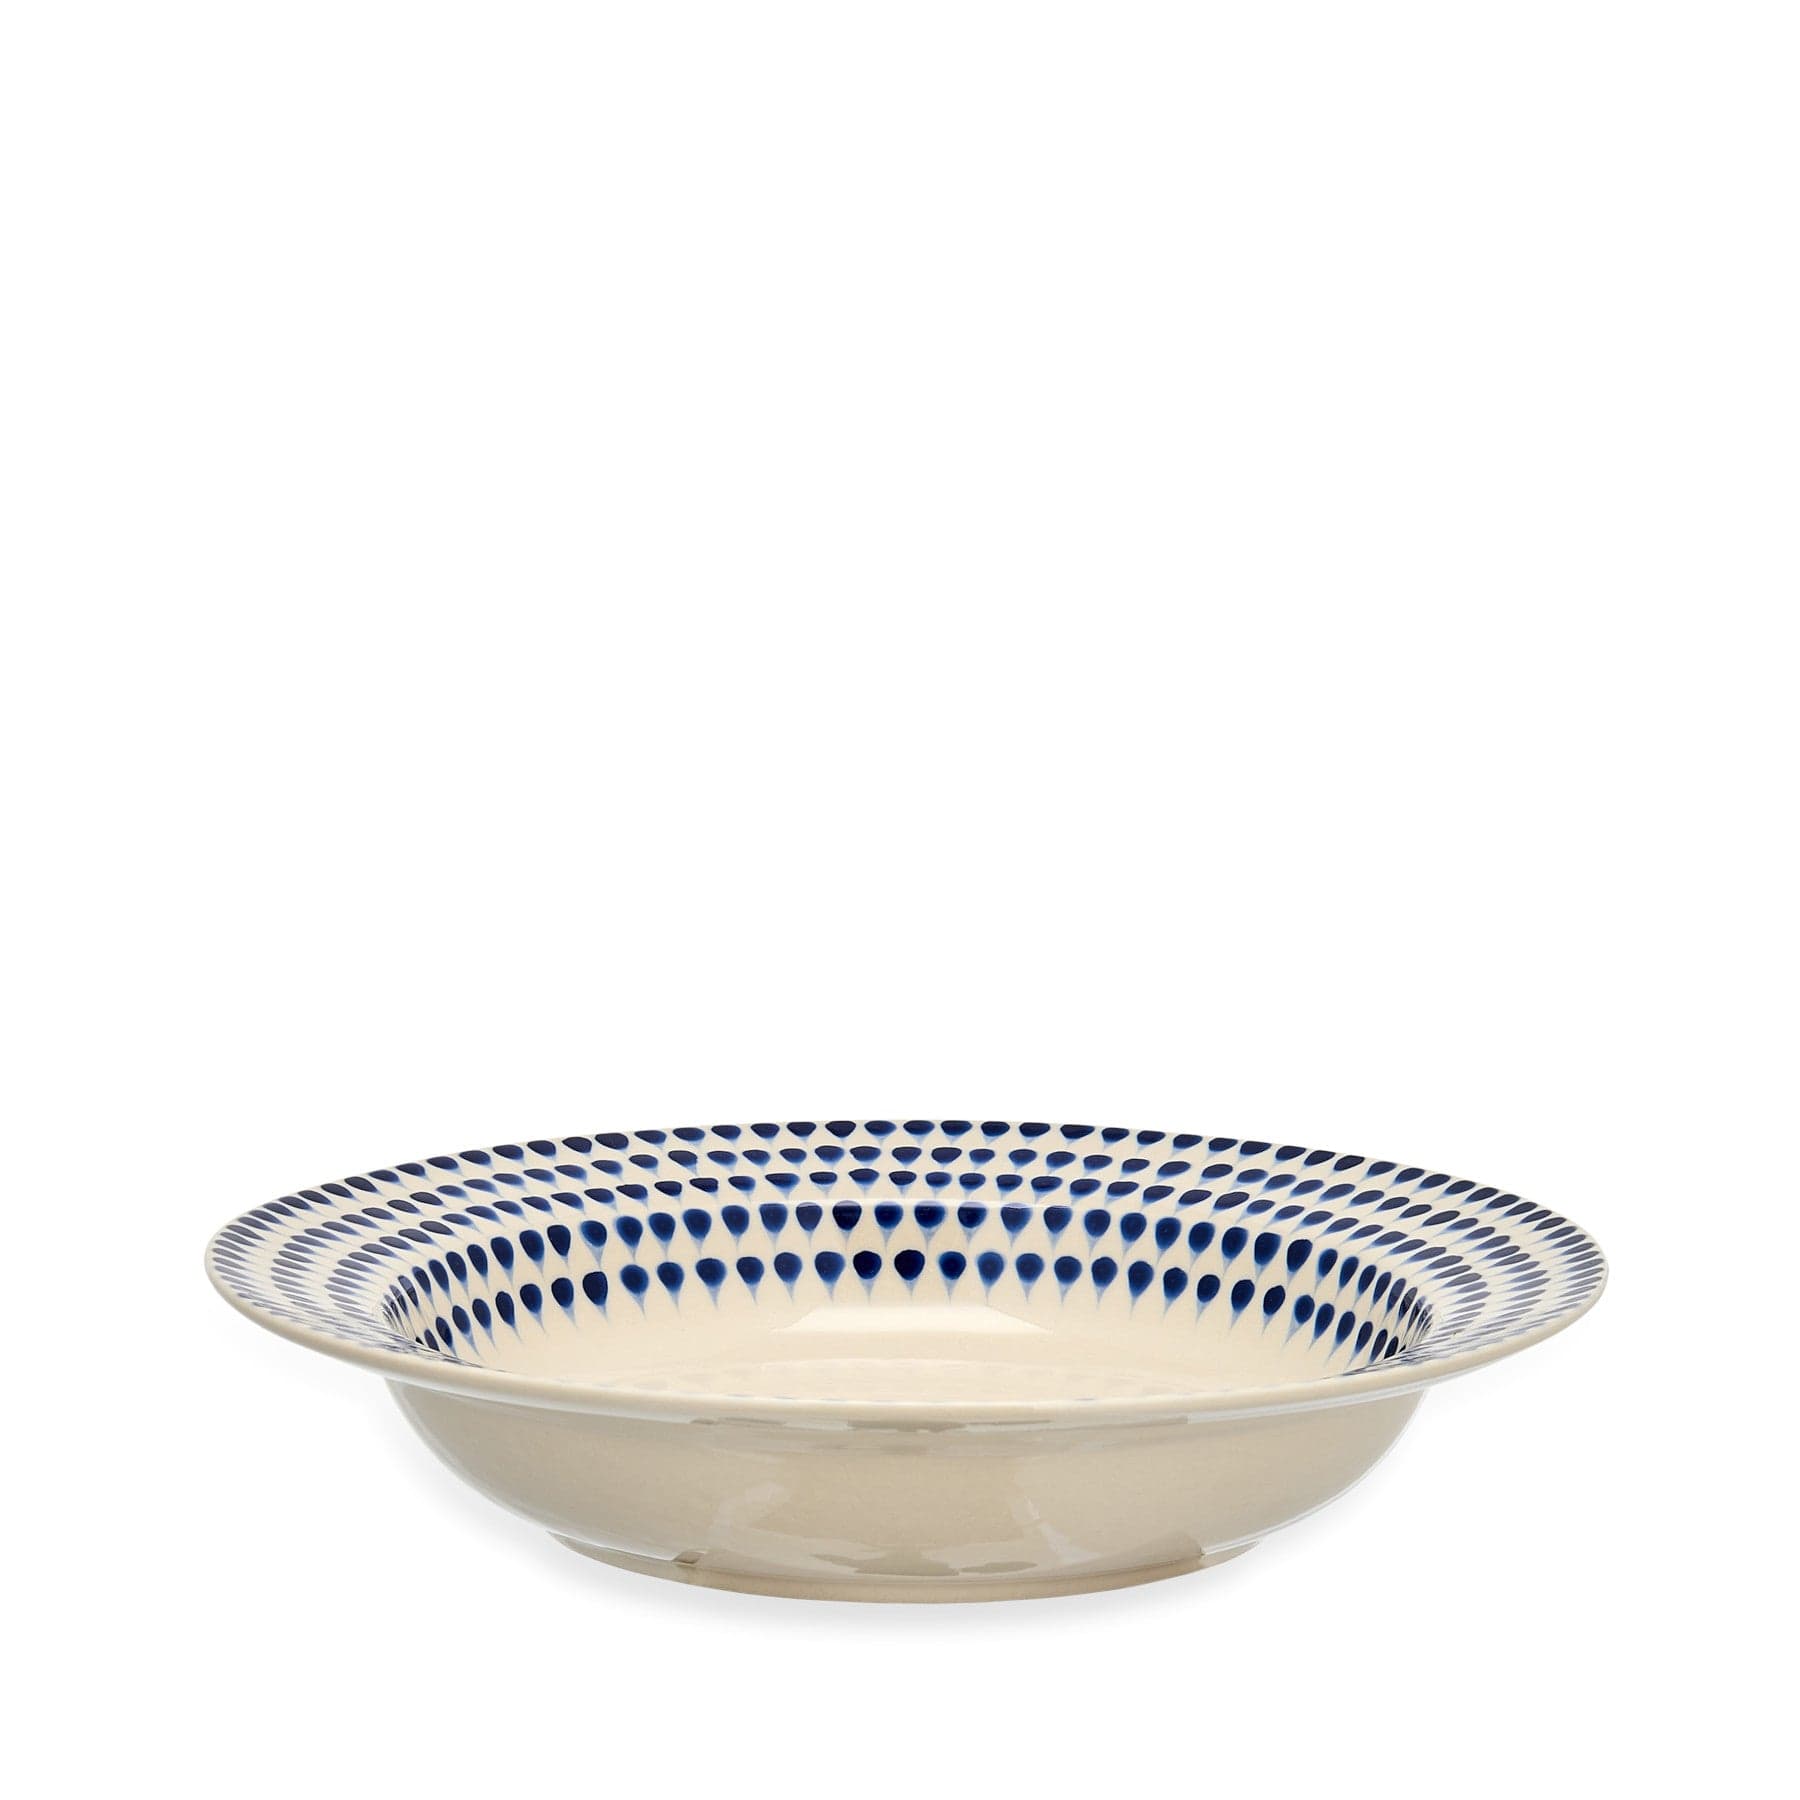 Ceramic bowl with blue dot pattern on rim on white background